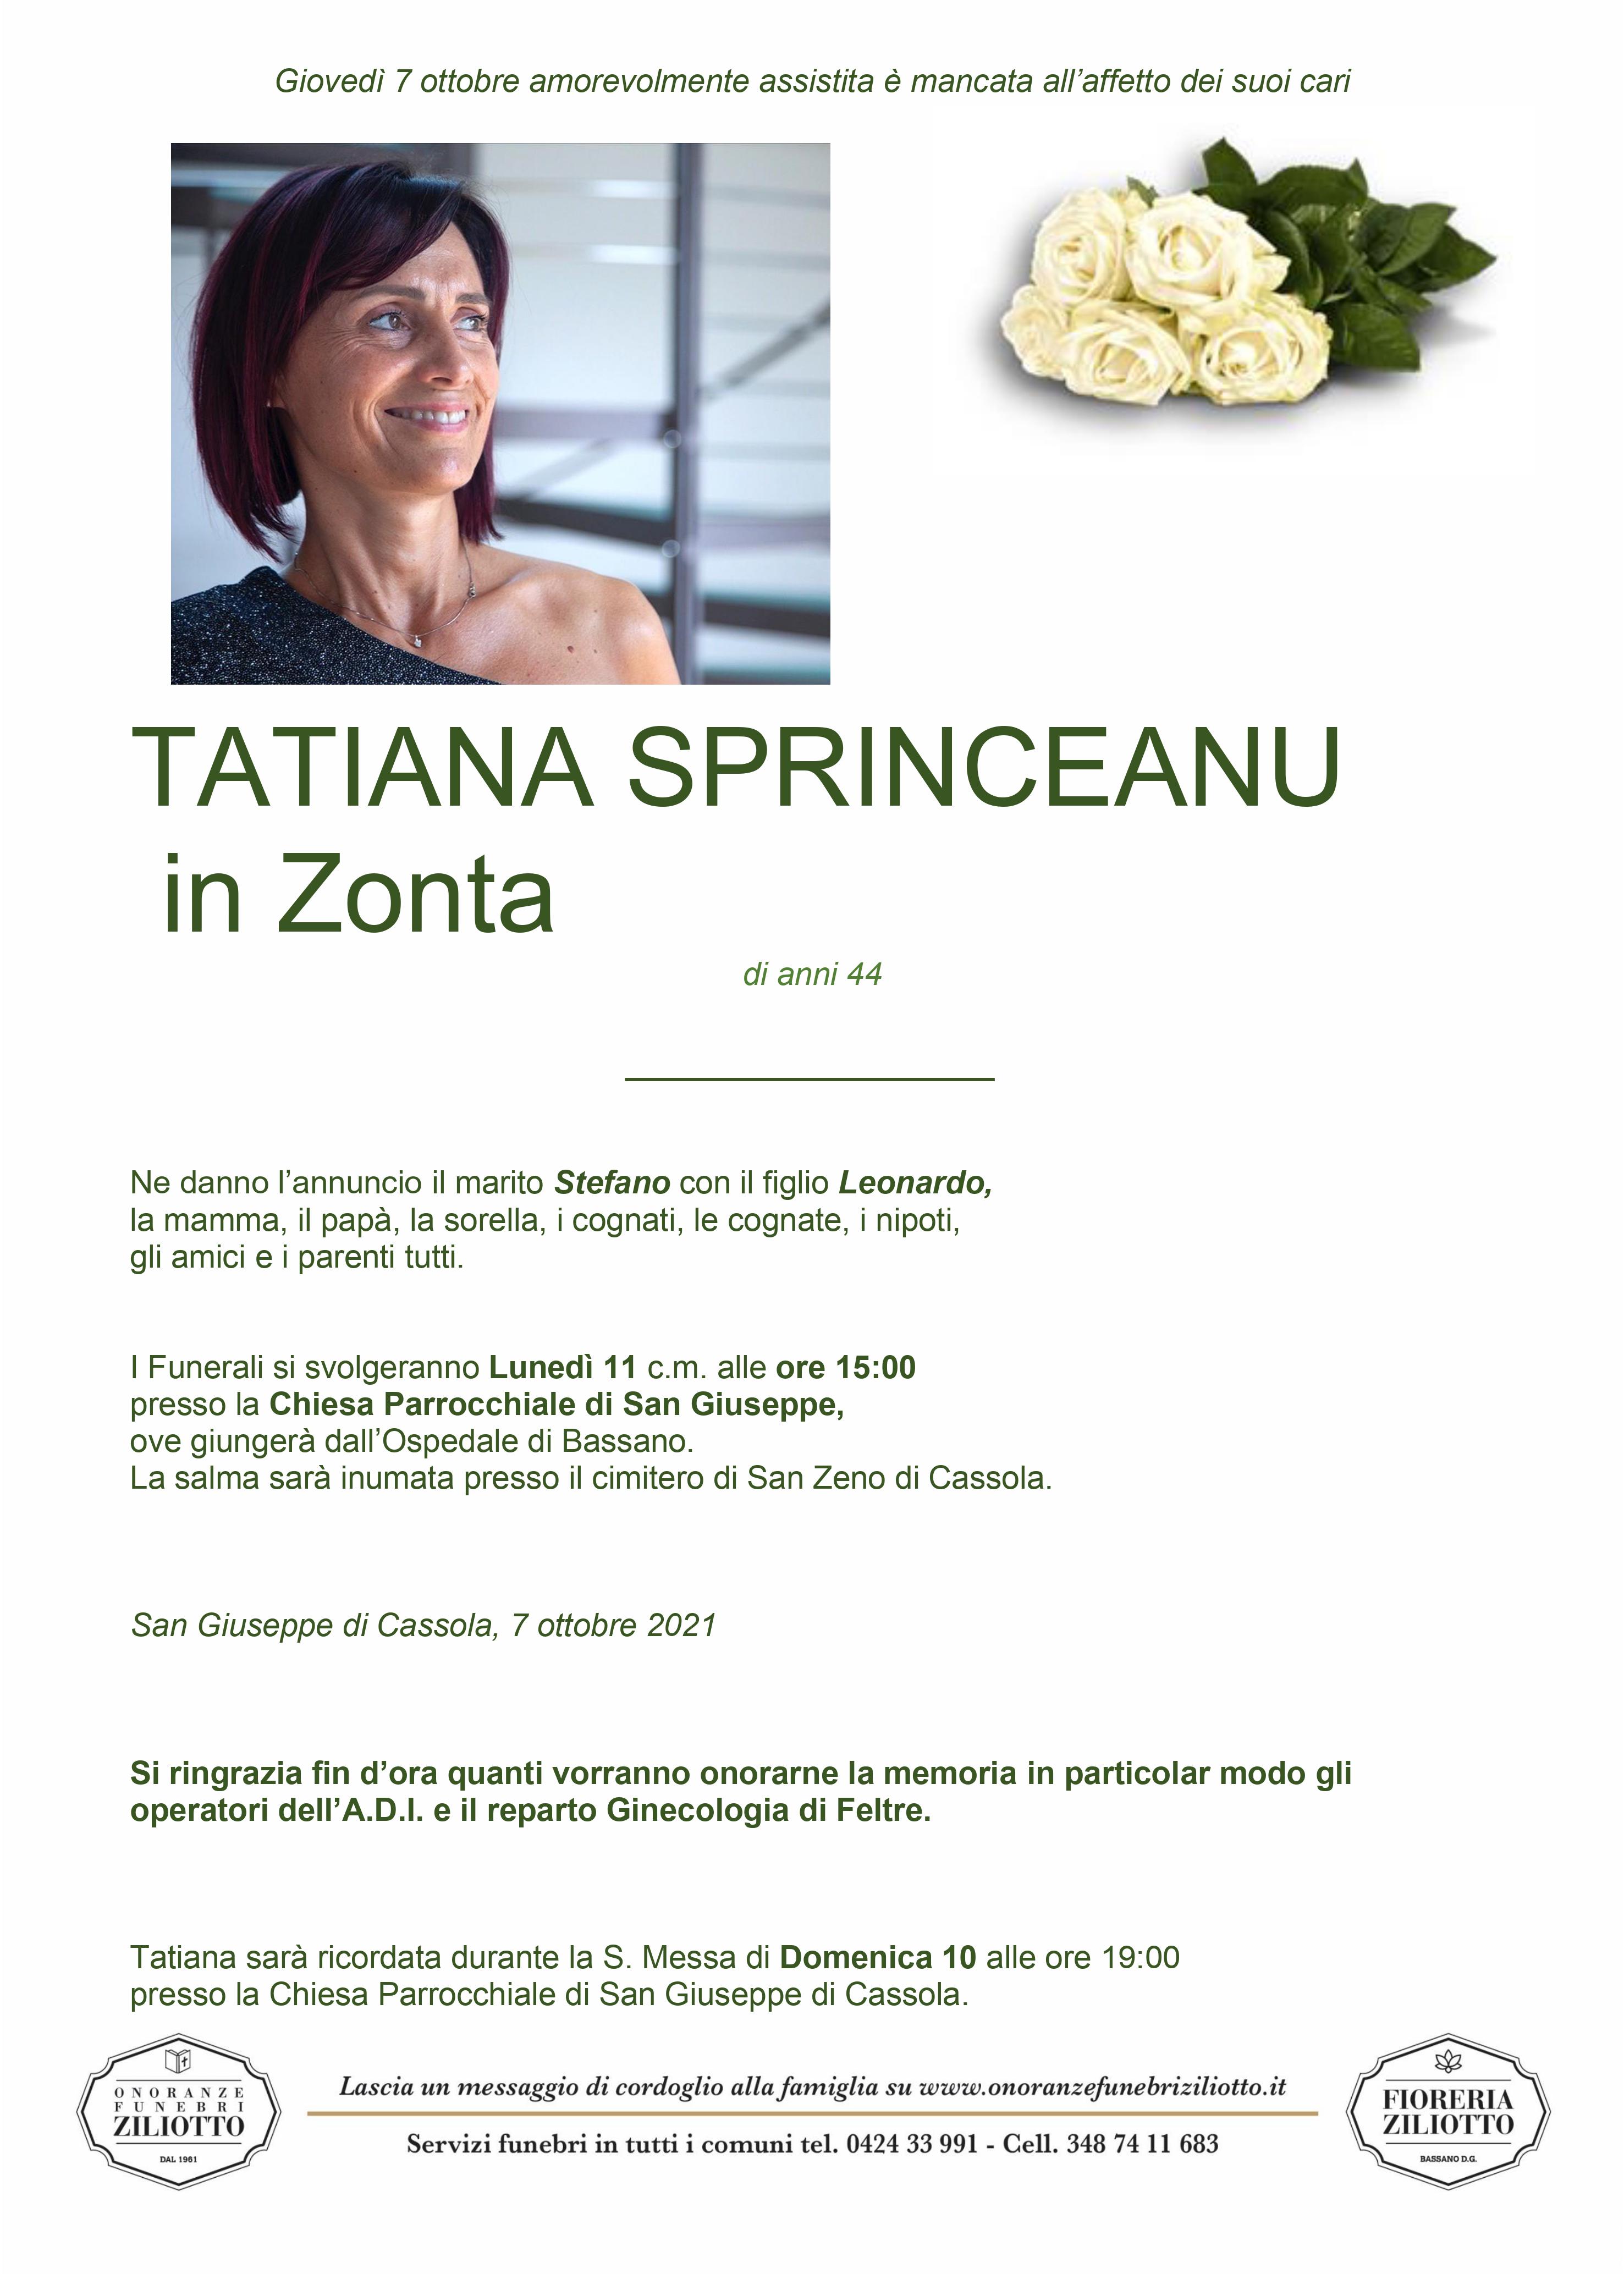 Tatiana Sprinceanu - 44 anni - San Giuseppe di Cassola